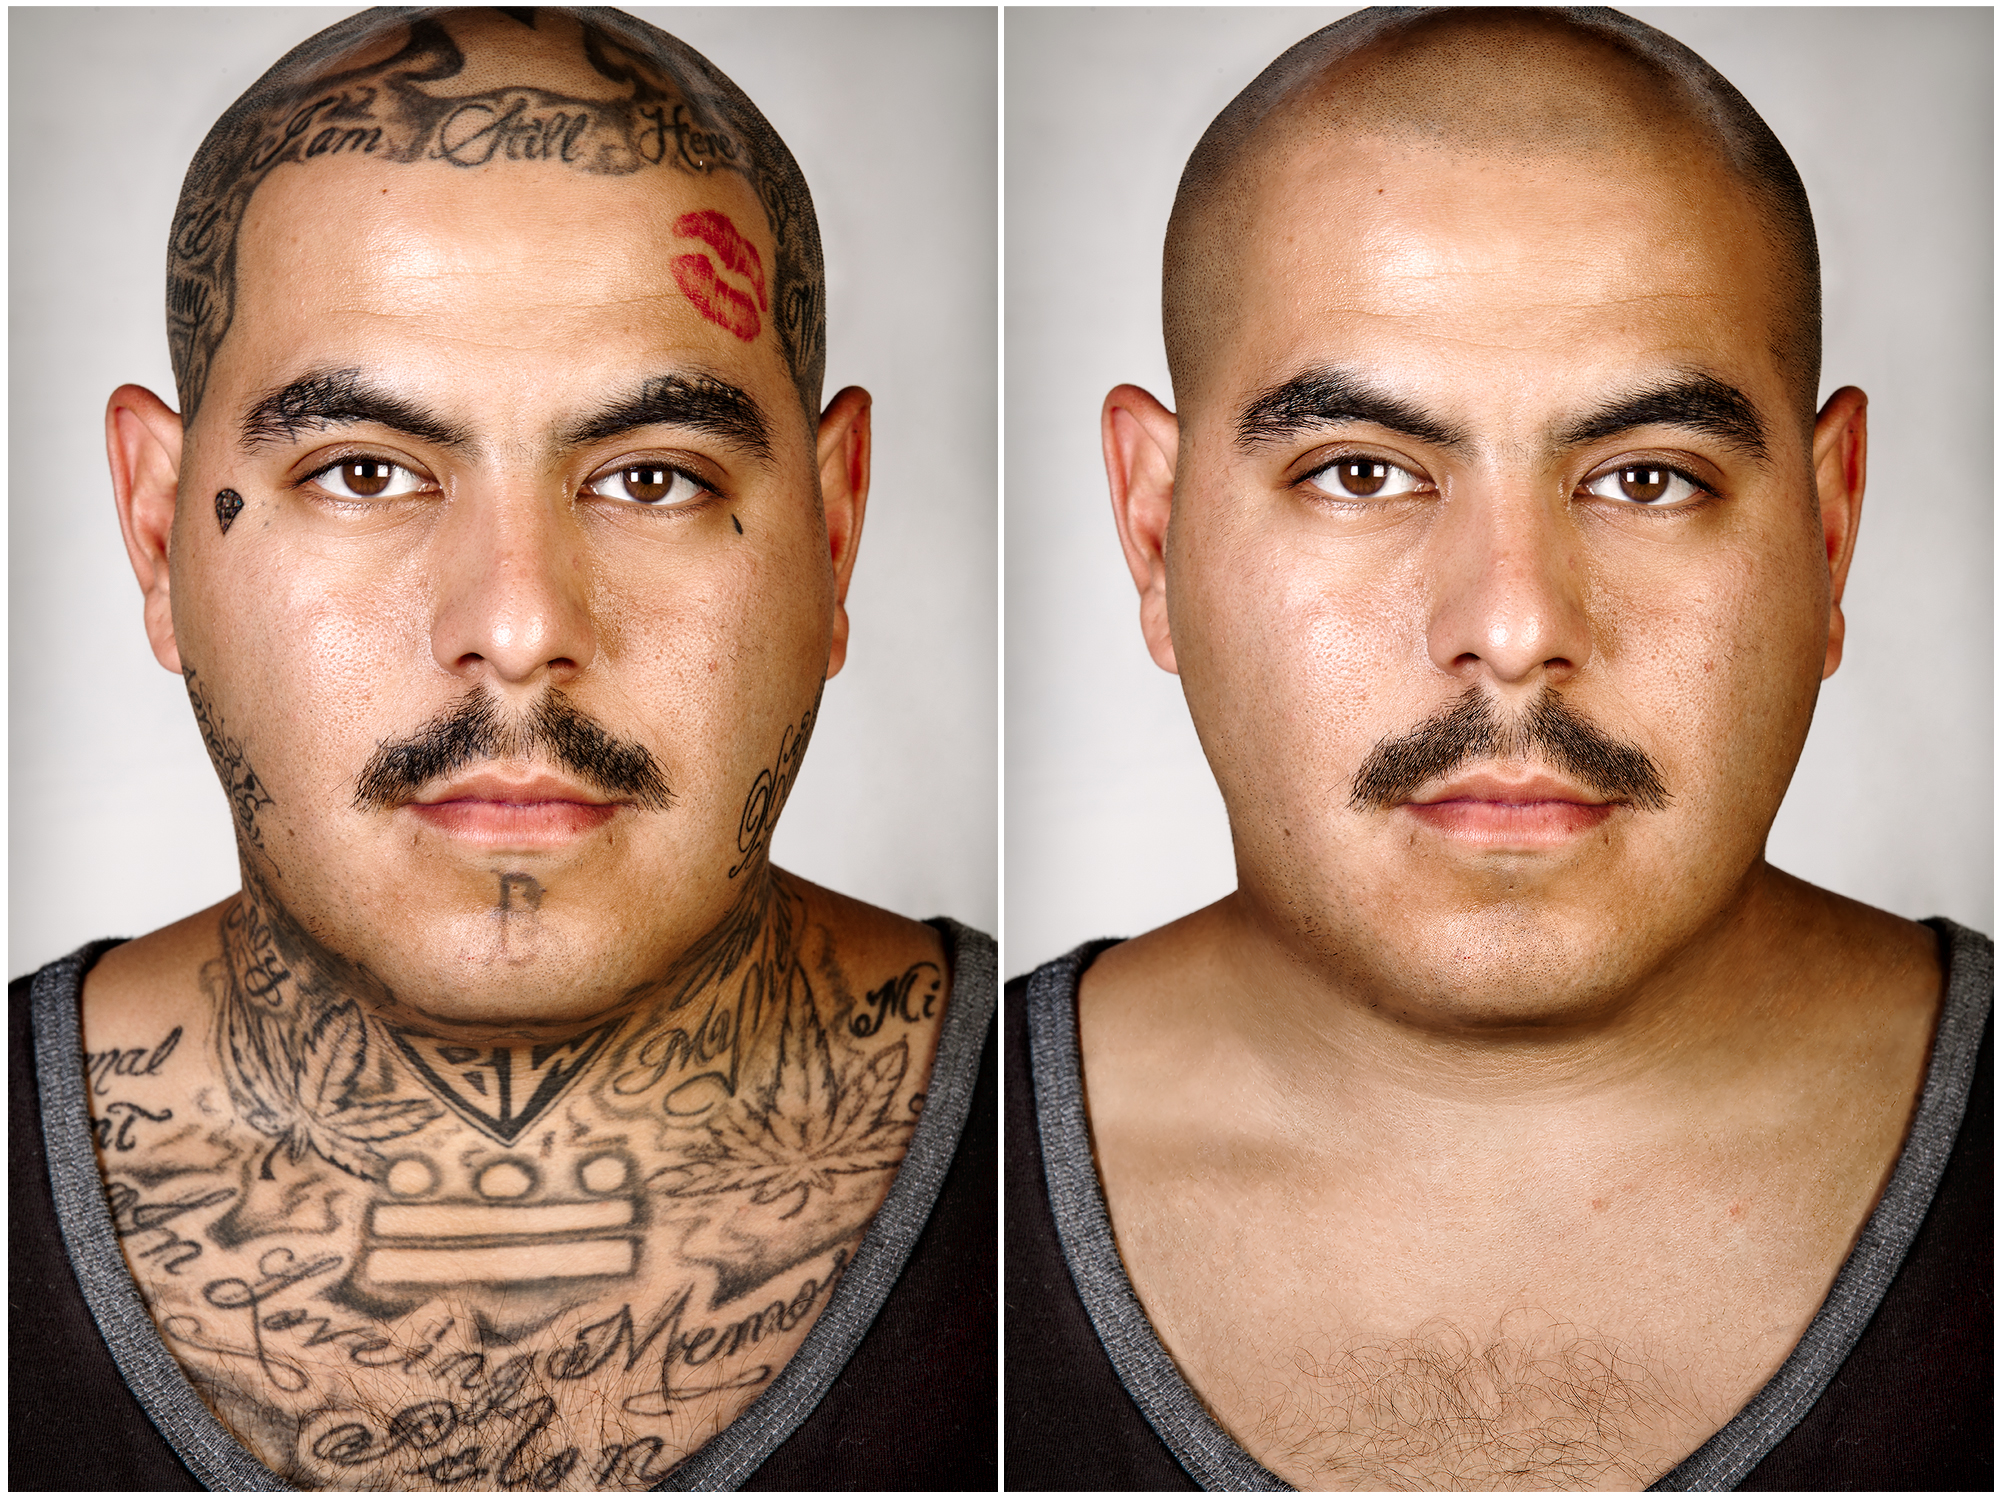 Tattoo Artists Cover Up Gang Tattoos | wfmynews2.com